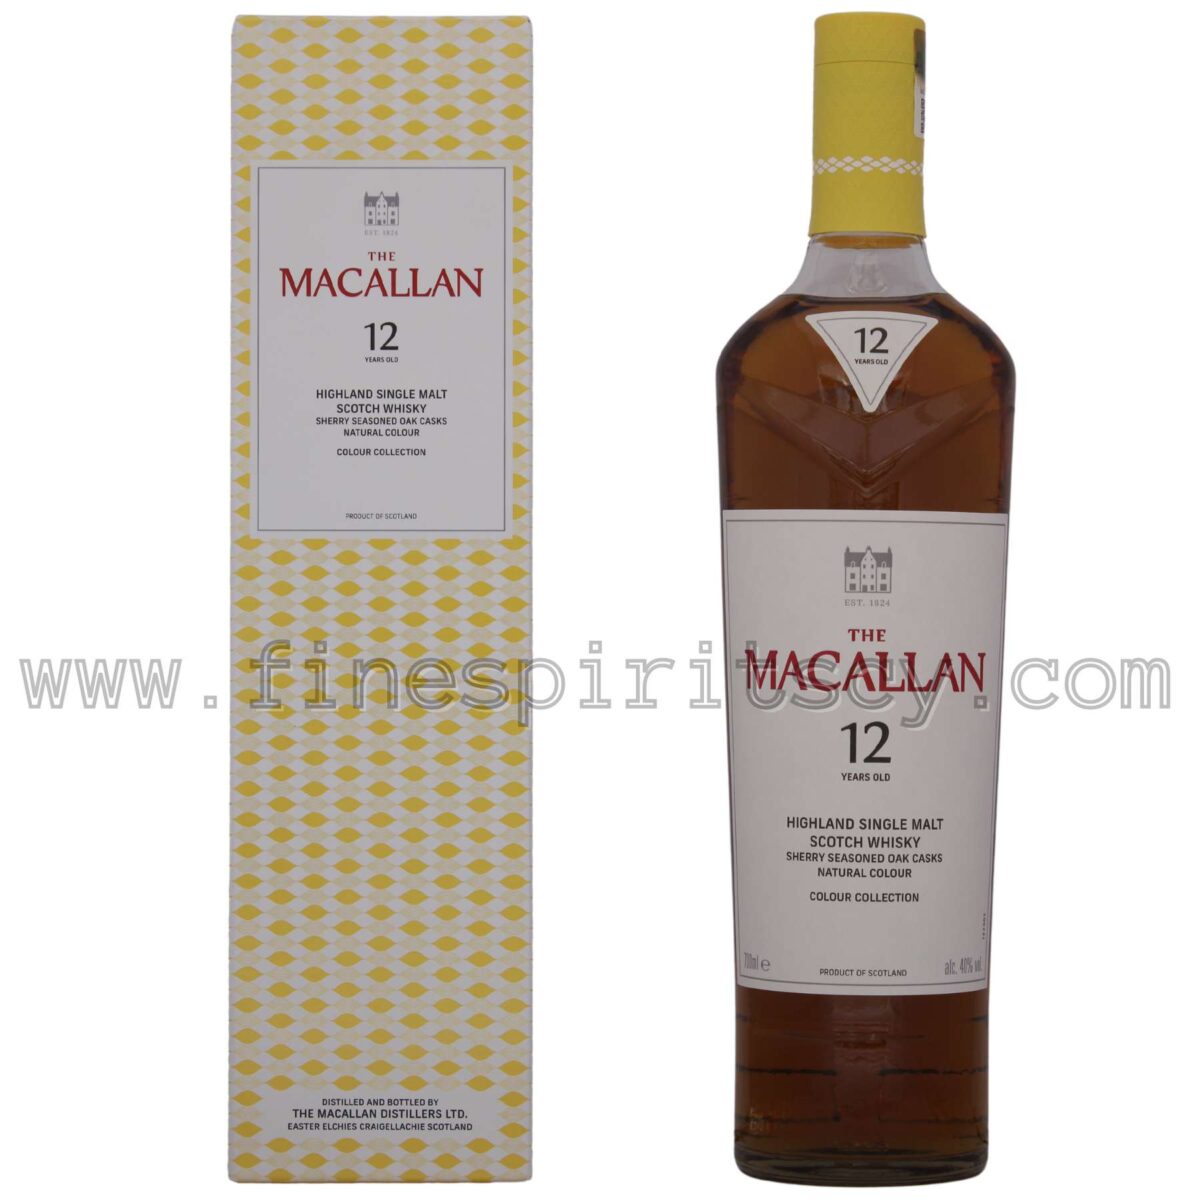 Macallan 12 YO Price Colour Collection Front Box Bottle Cyprus 40 ABV